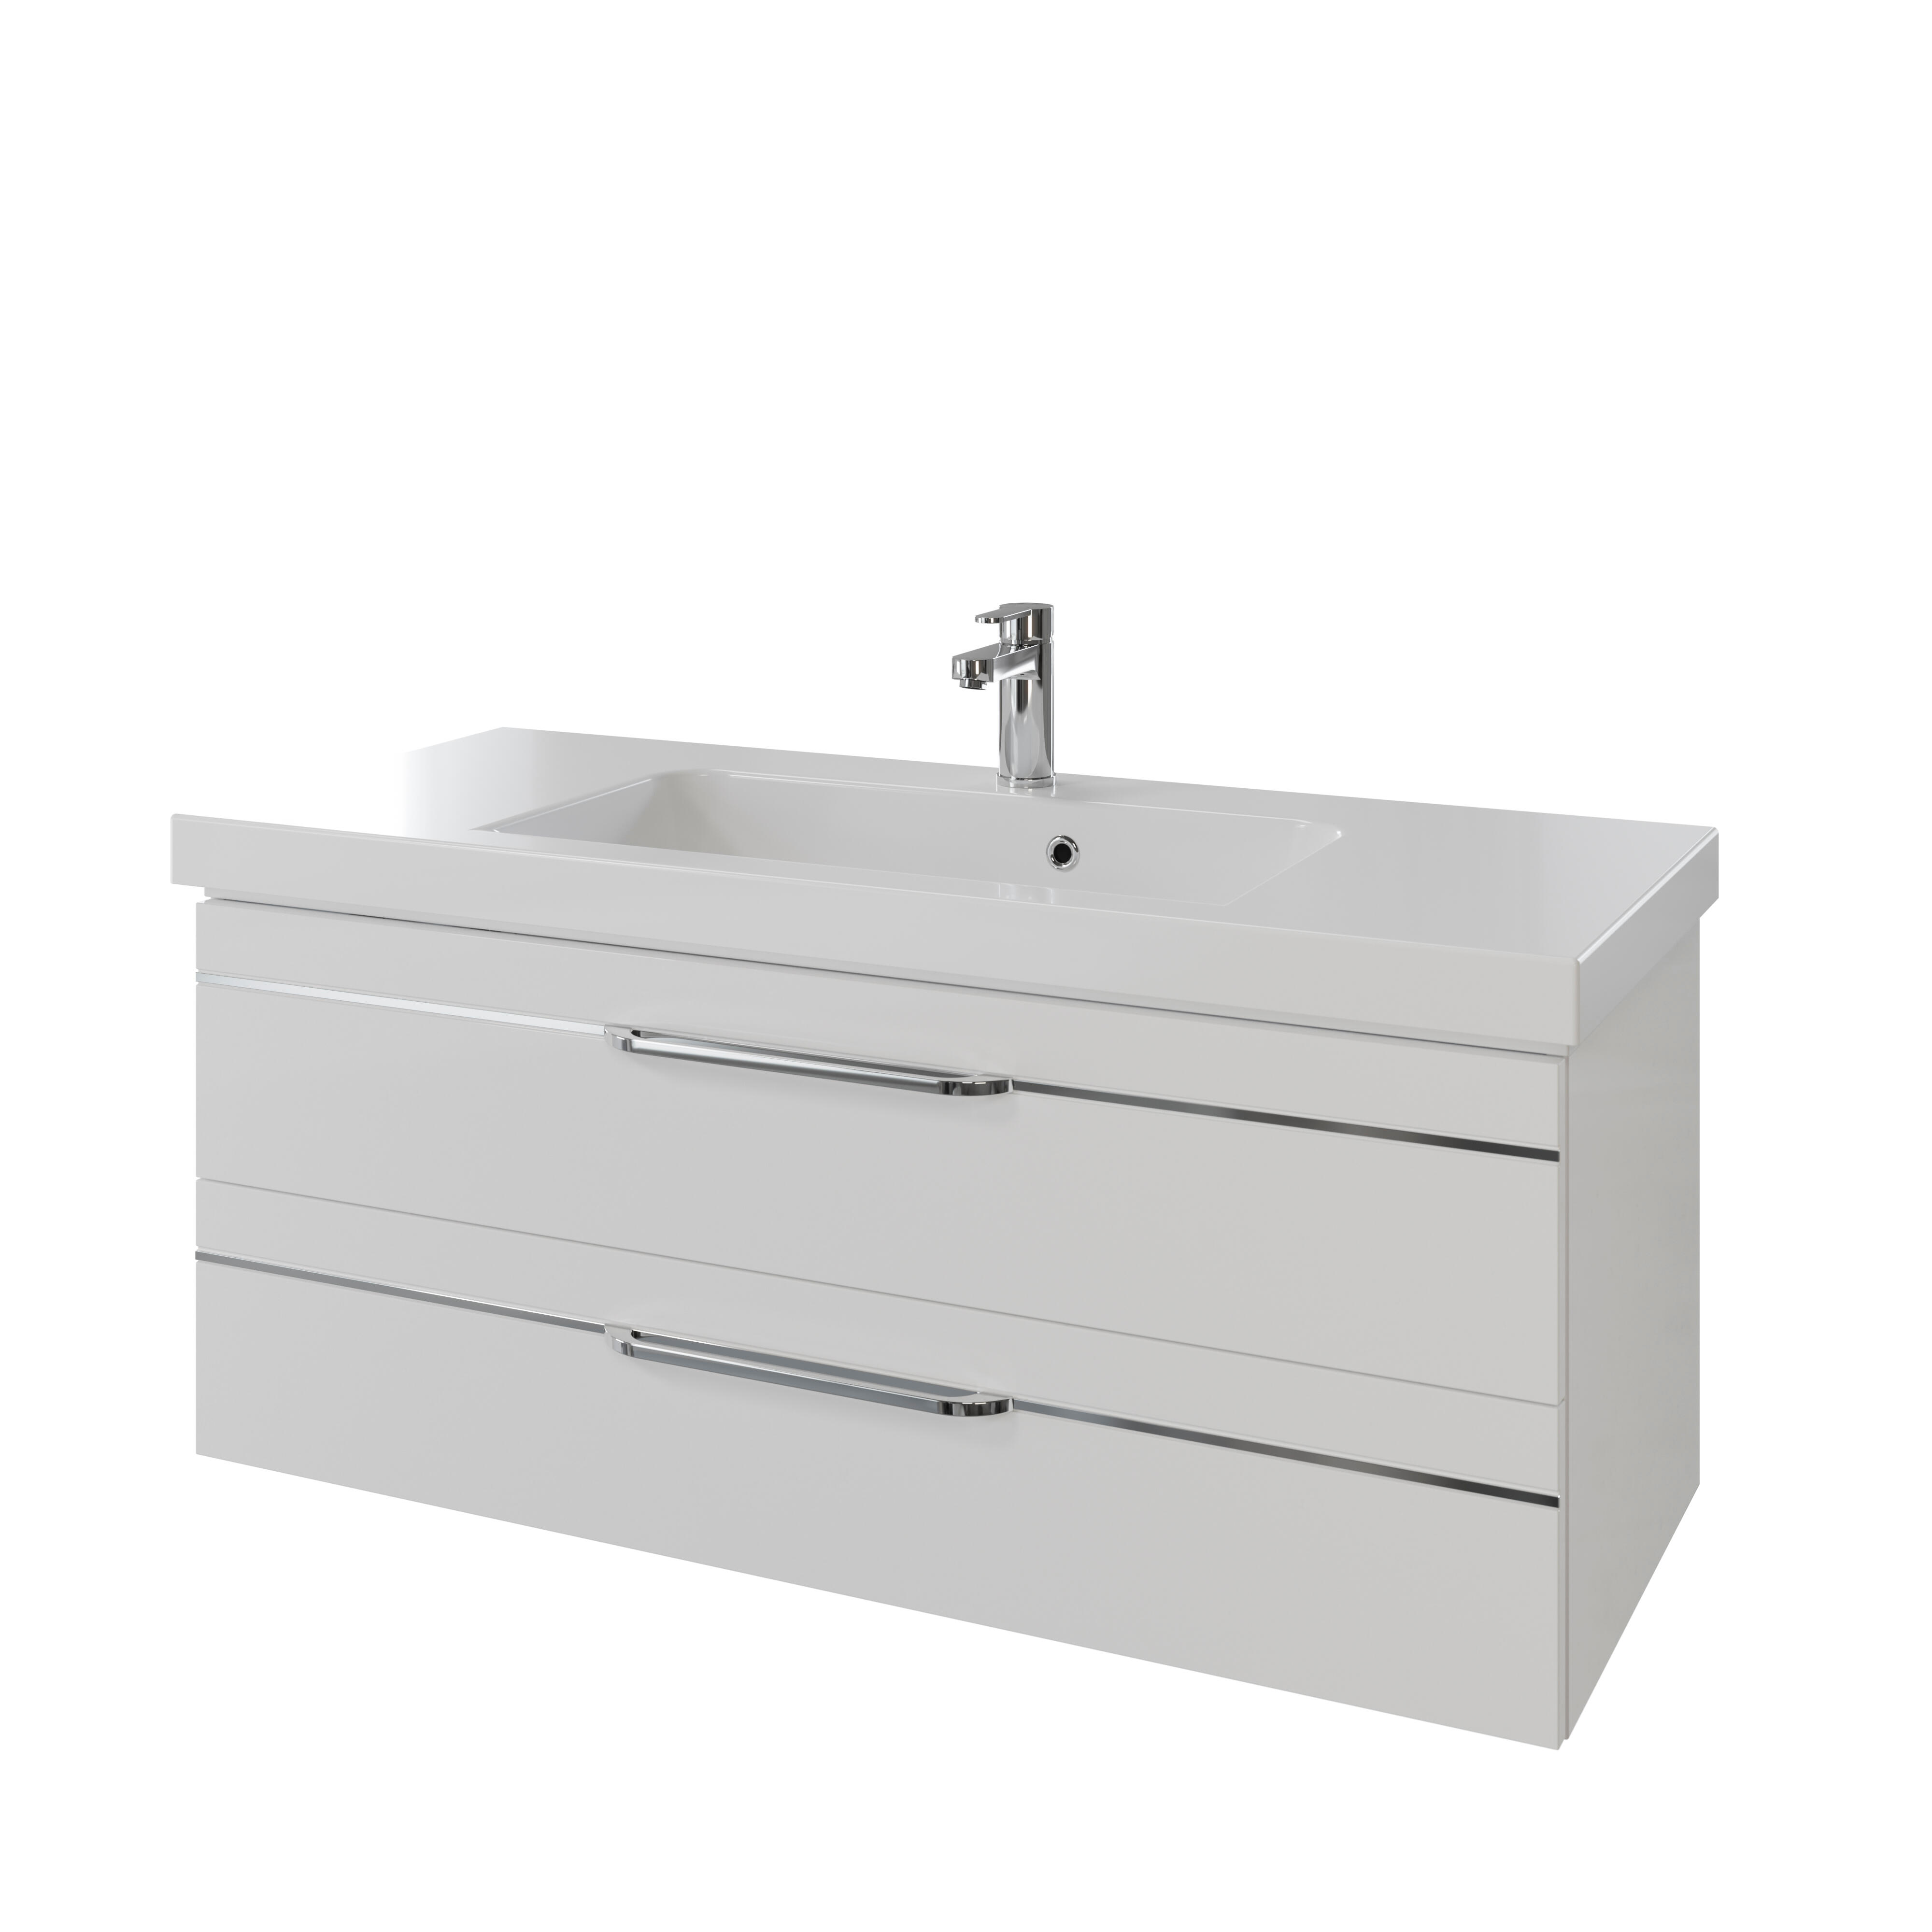 Mueble de baño con lavabo balto blanco 120x49 cm